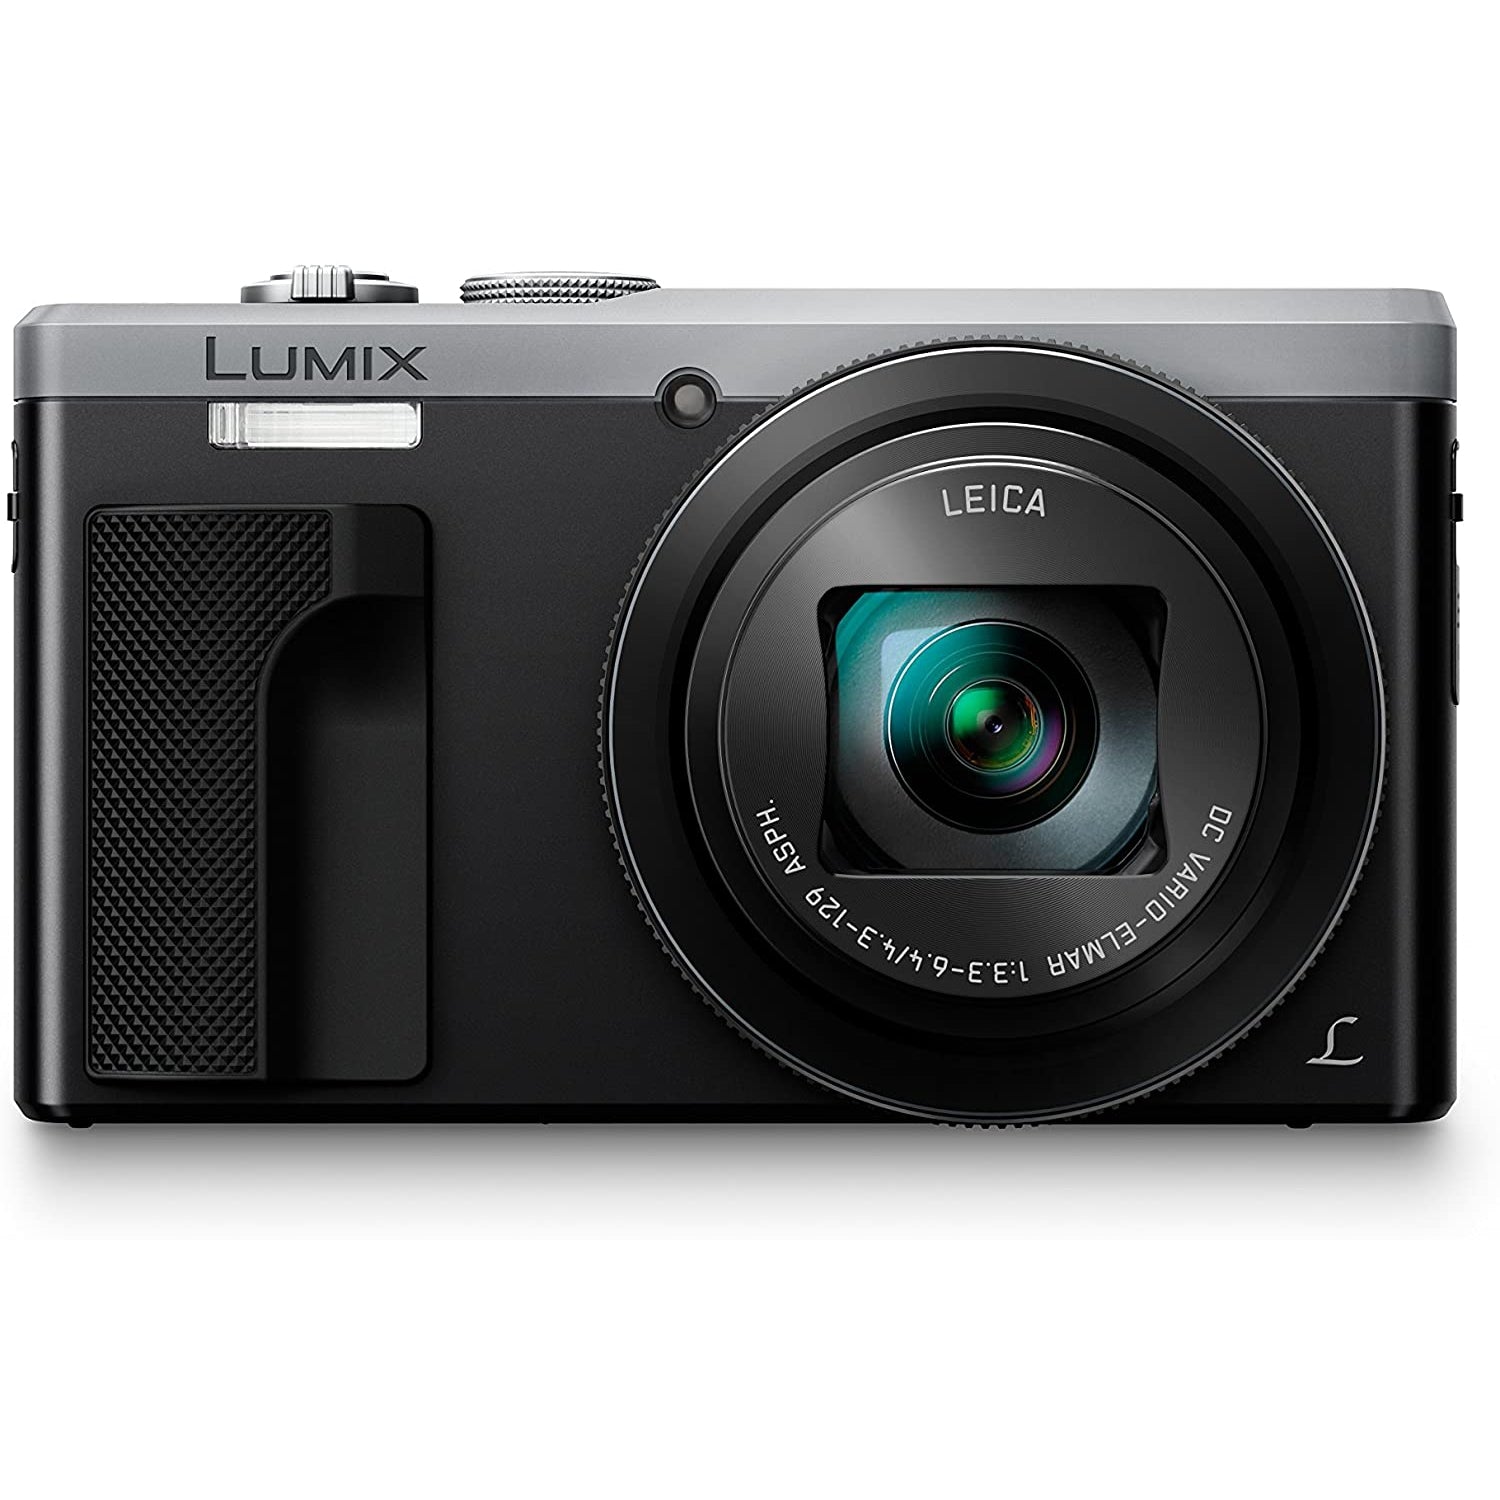 Panasonic Lumix DMC-TZ80 Super Zoom Digital Camera - Silver